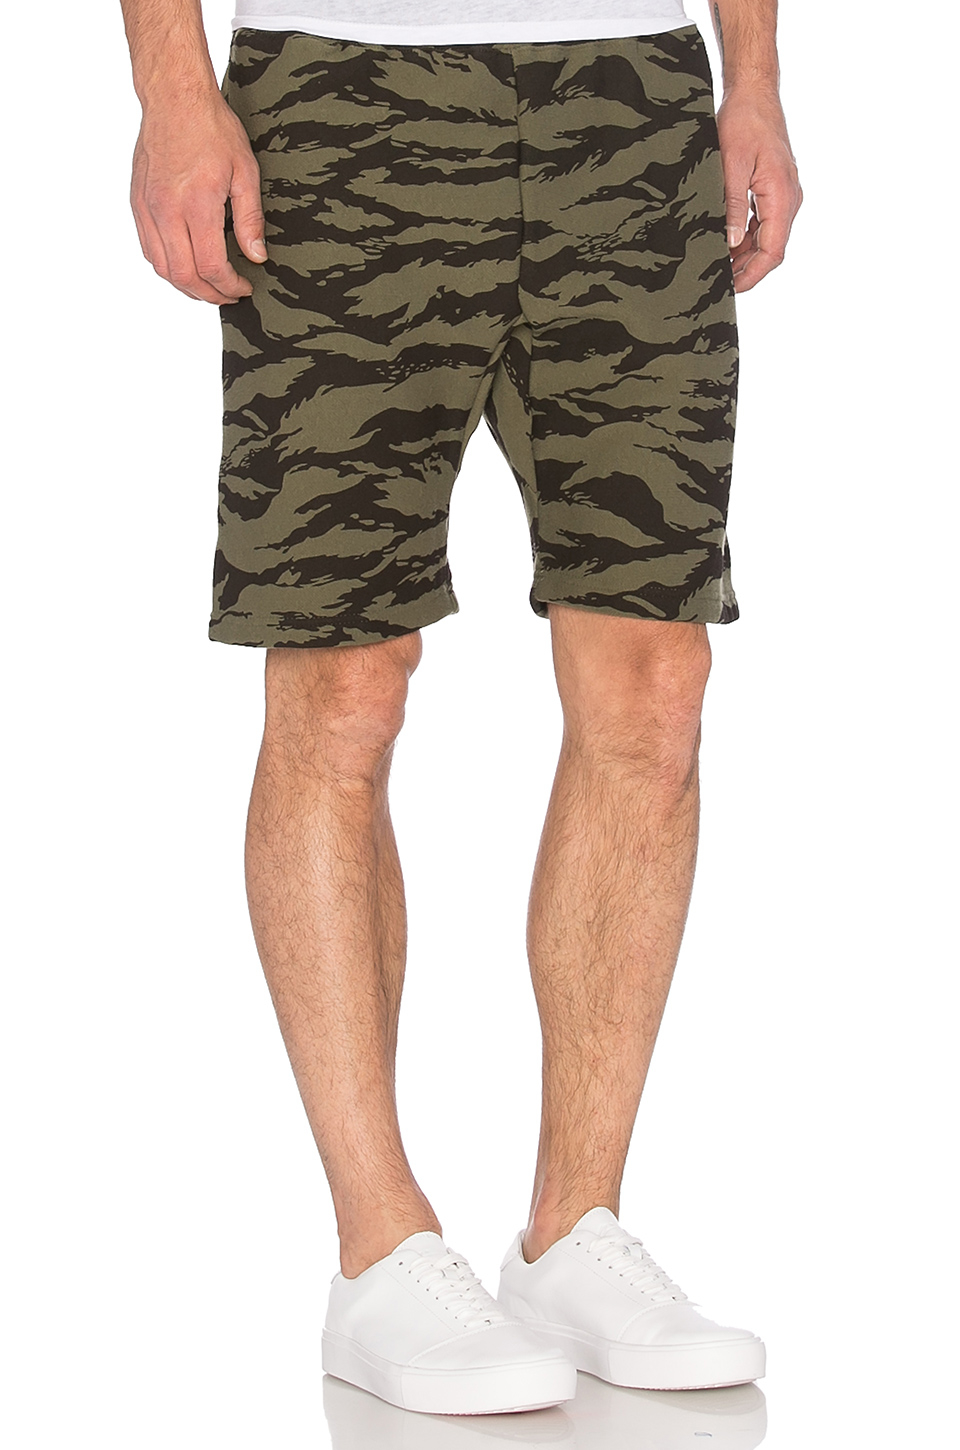 Stussy Stock Fleece Shorts in Natural for Men - Lyst